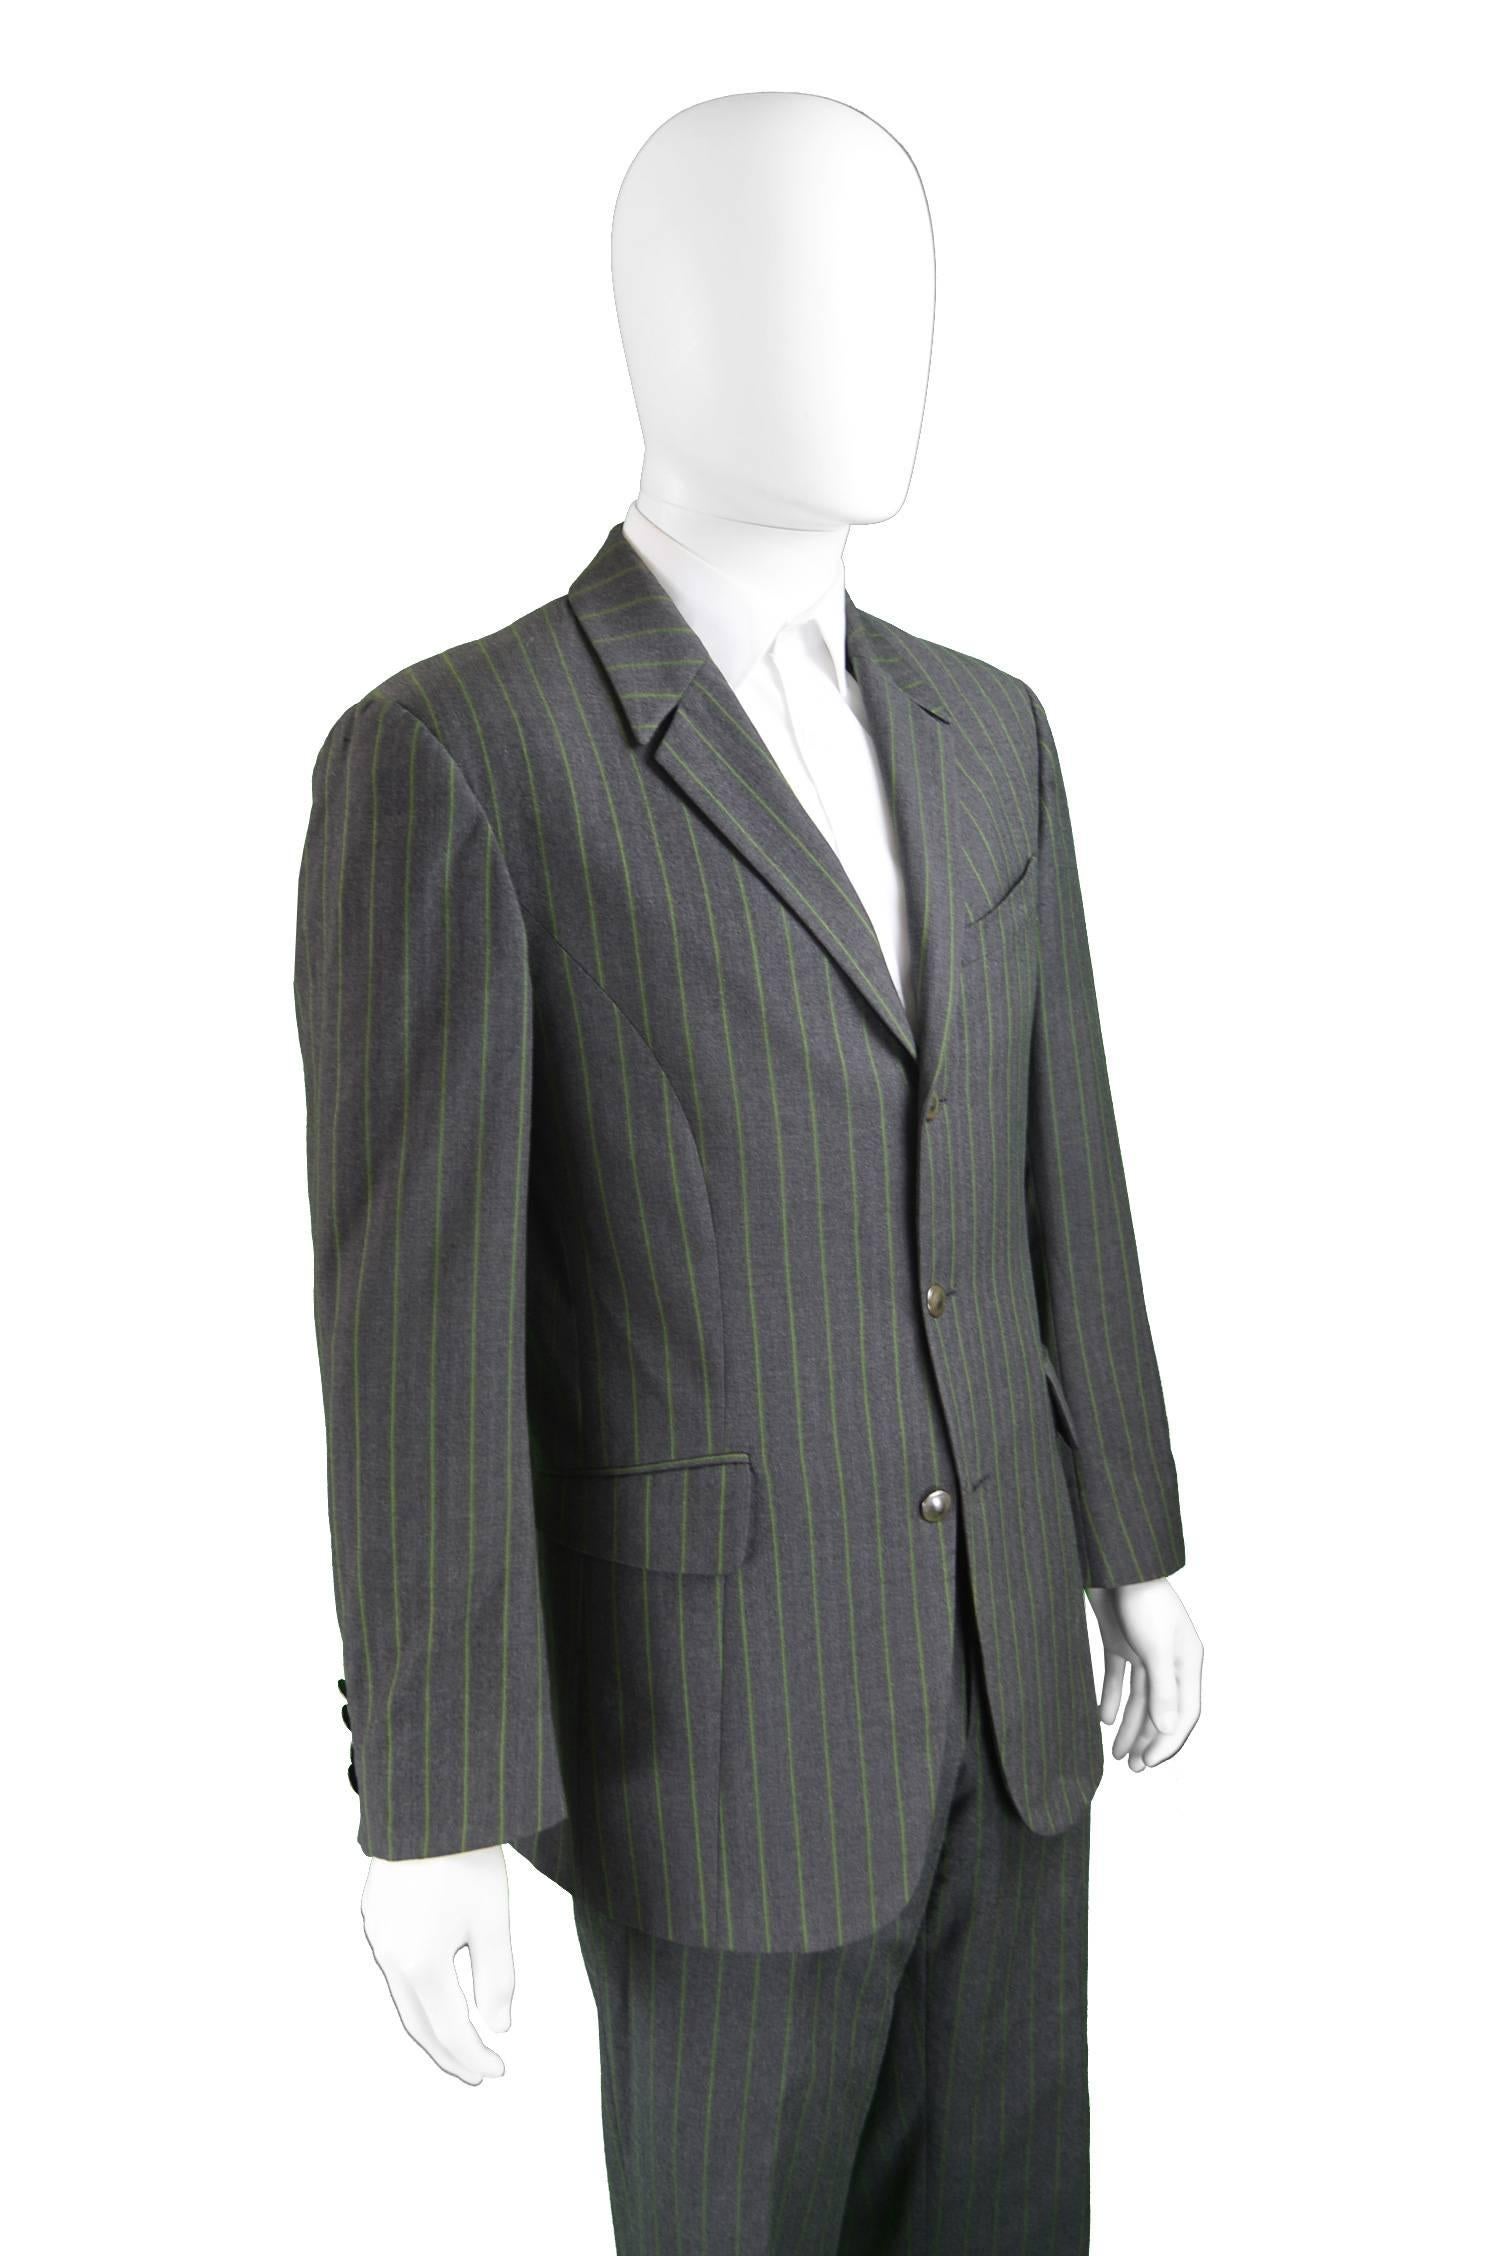 thierry mugler men's suit